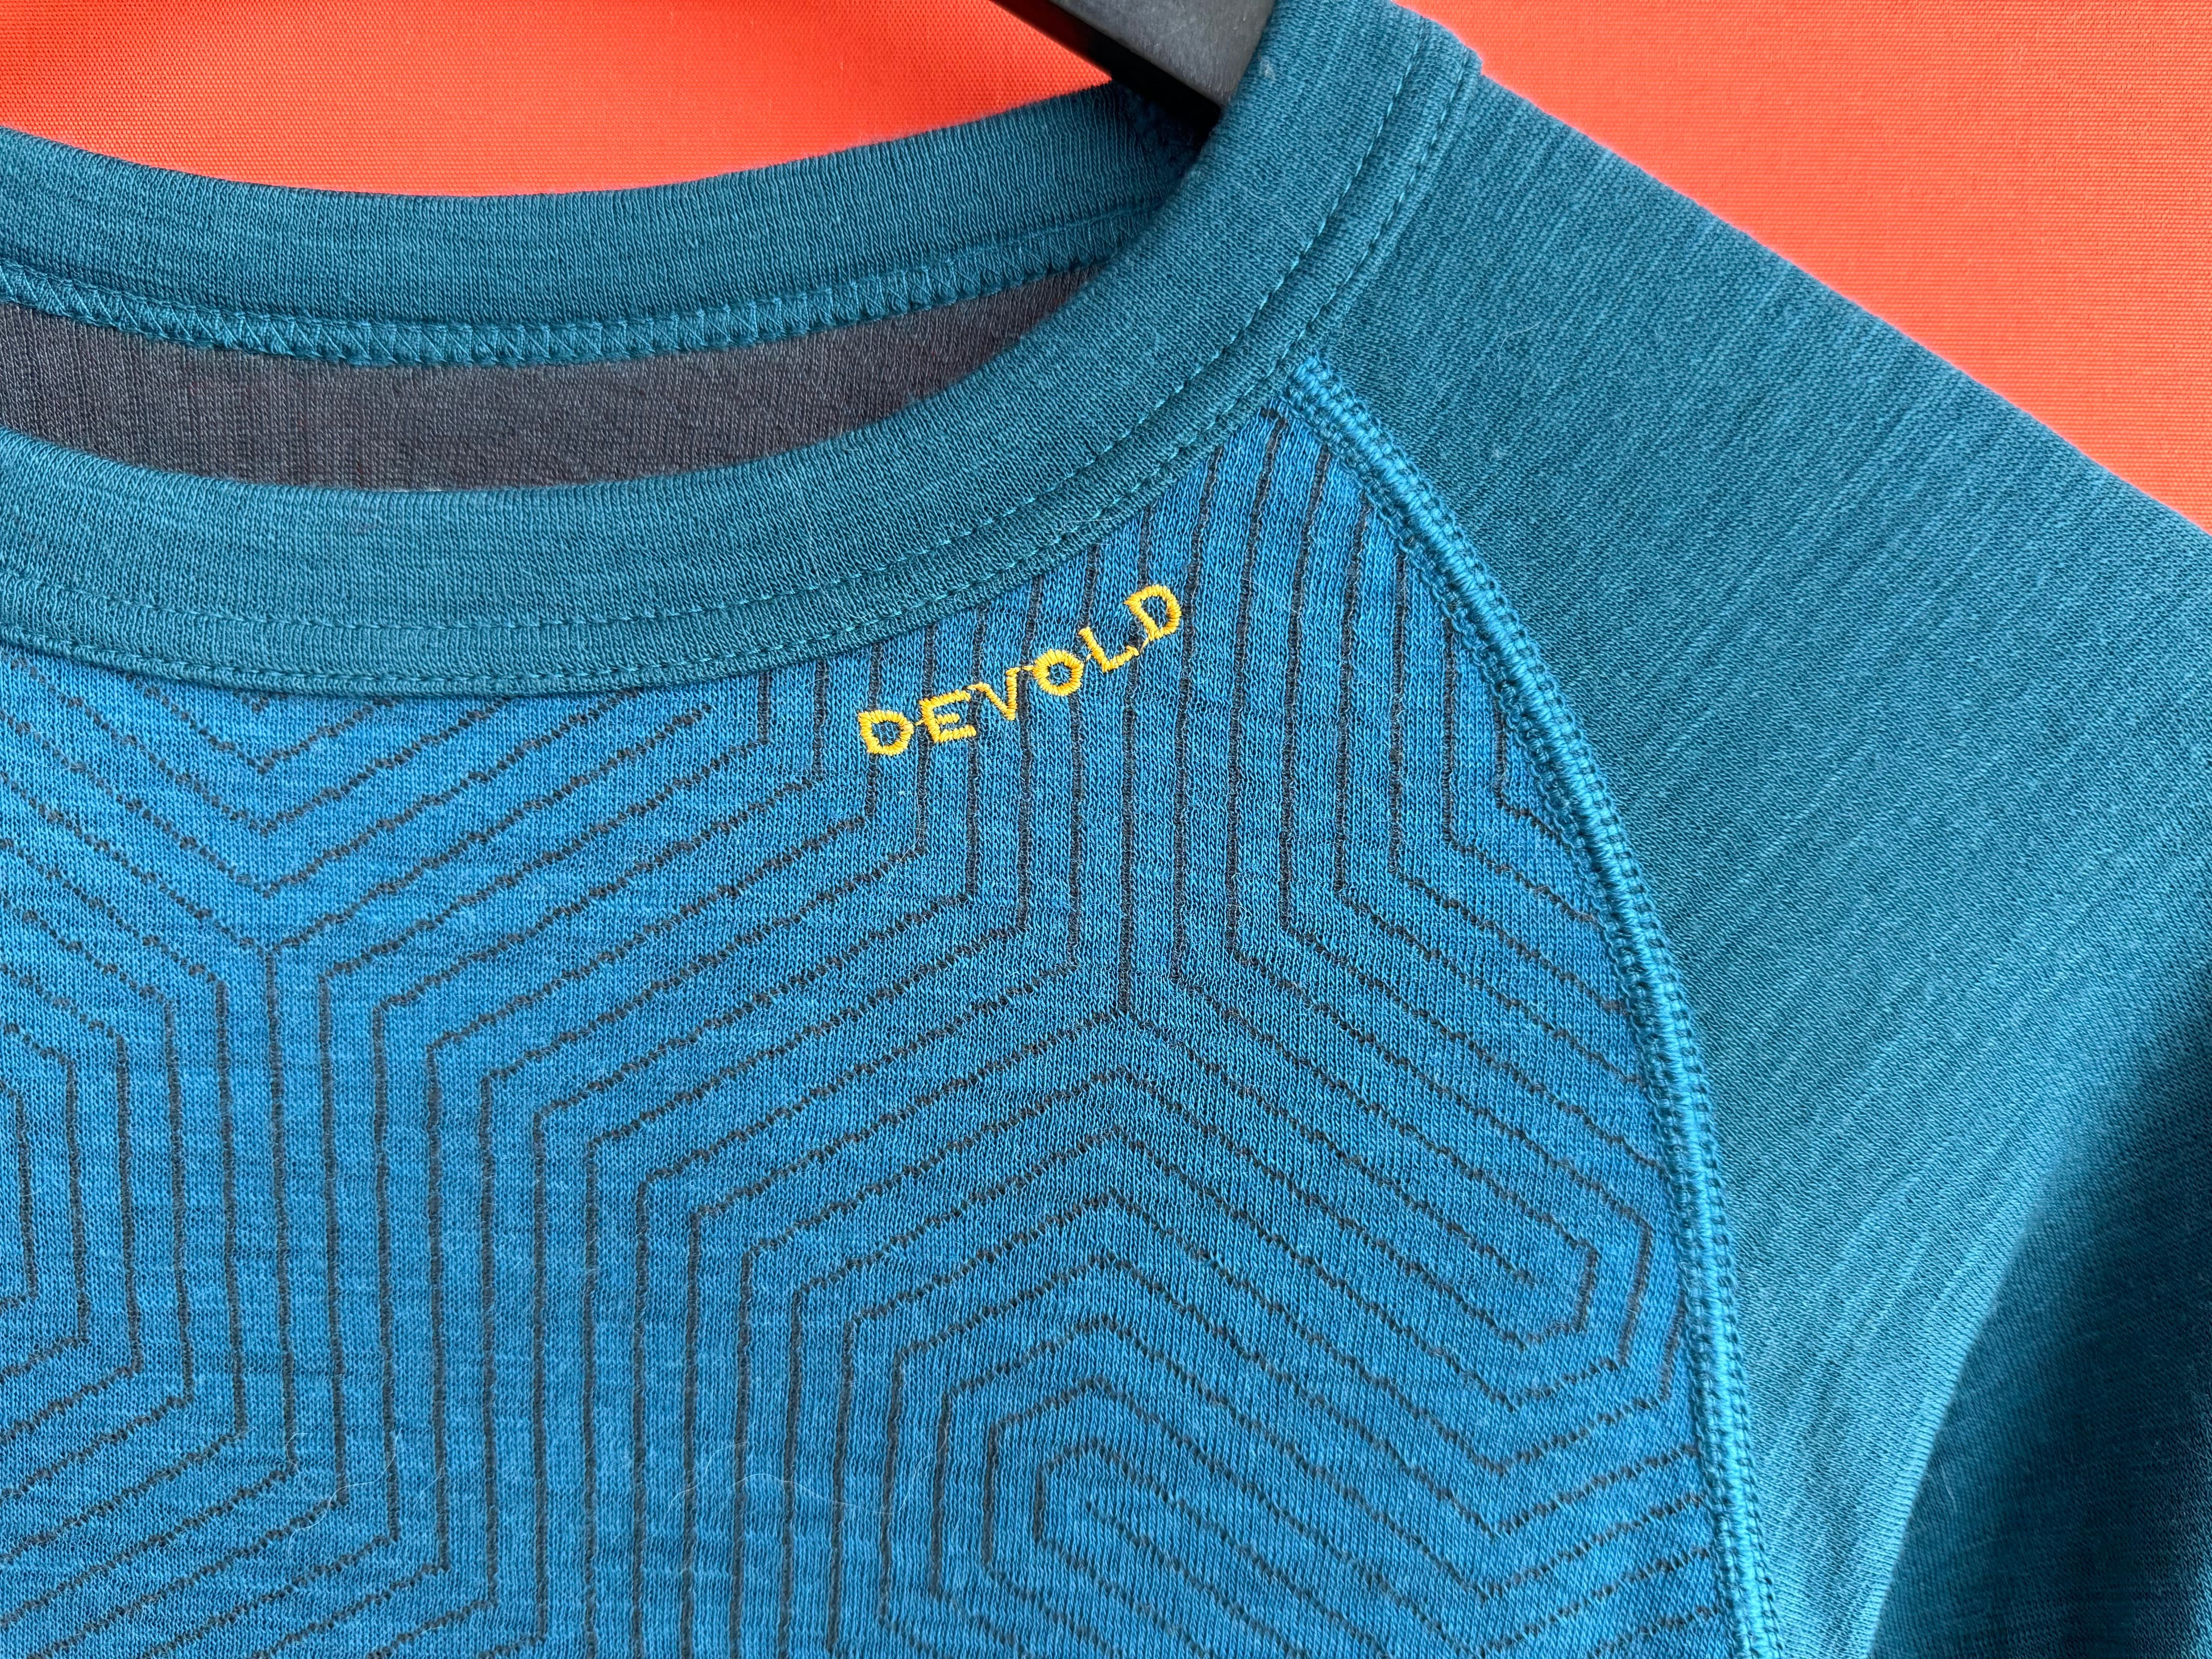 Devold Merino мужская термо кофта лонгслив свитер меринос размер S Б У